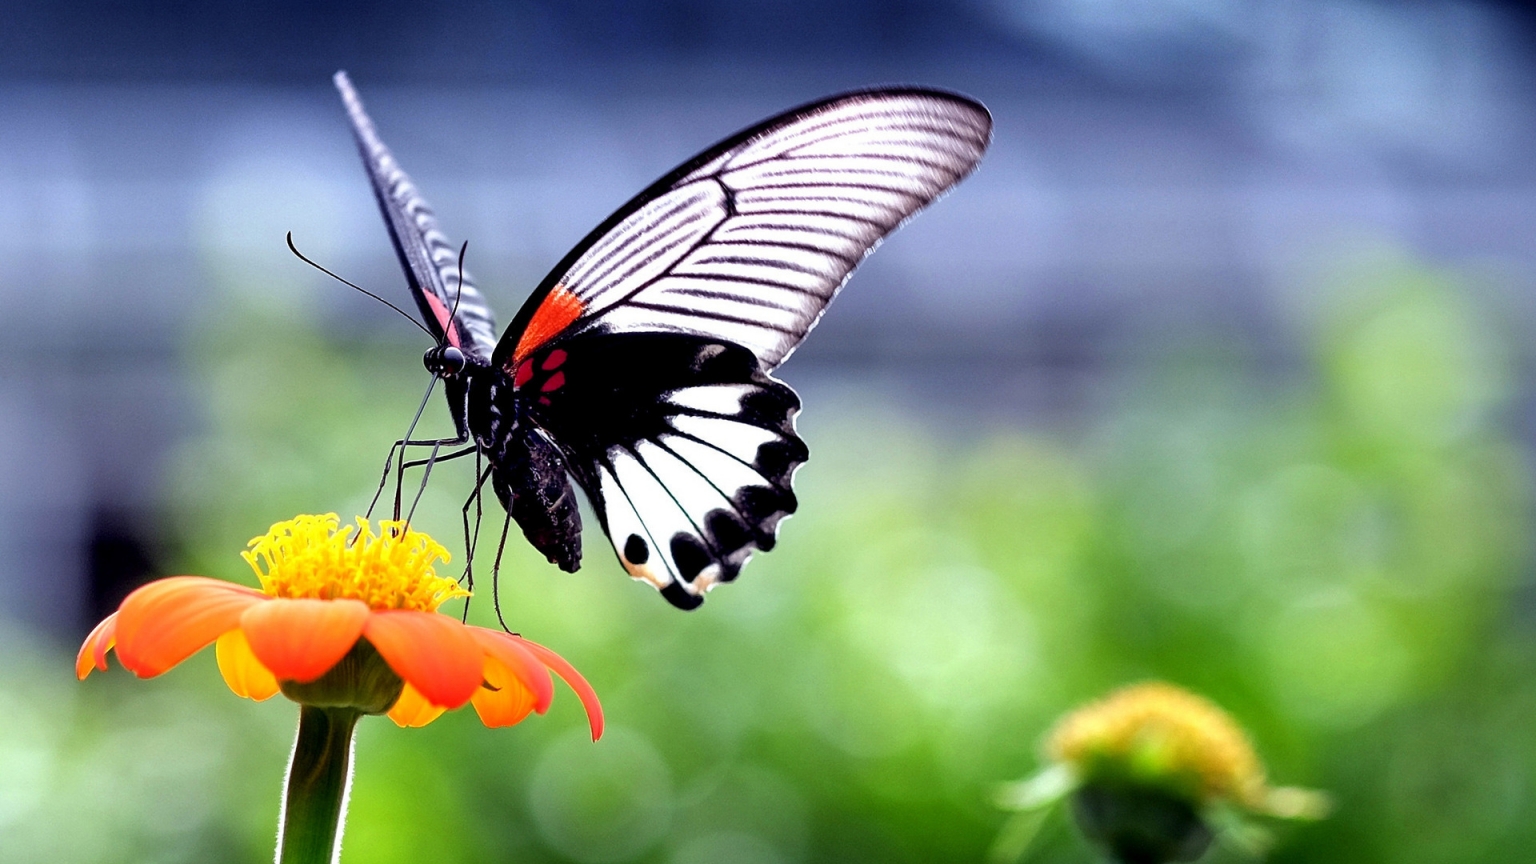 Beautiful Butterfly on Orange Flower for 1536 x 864 HDTV resolution